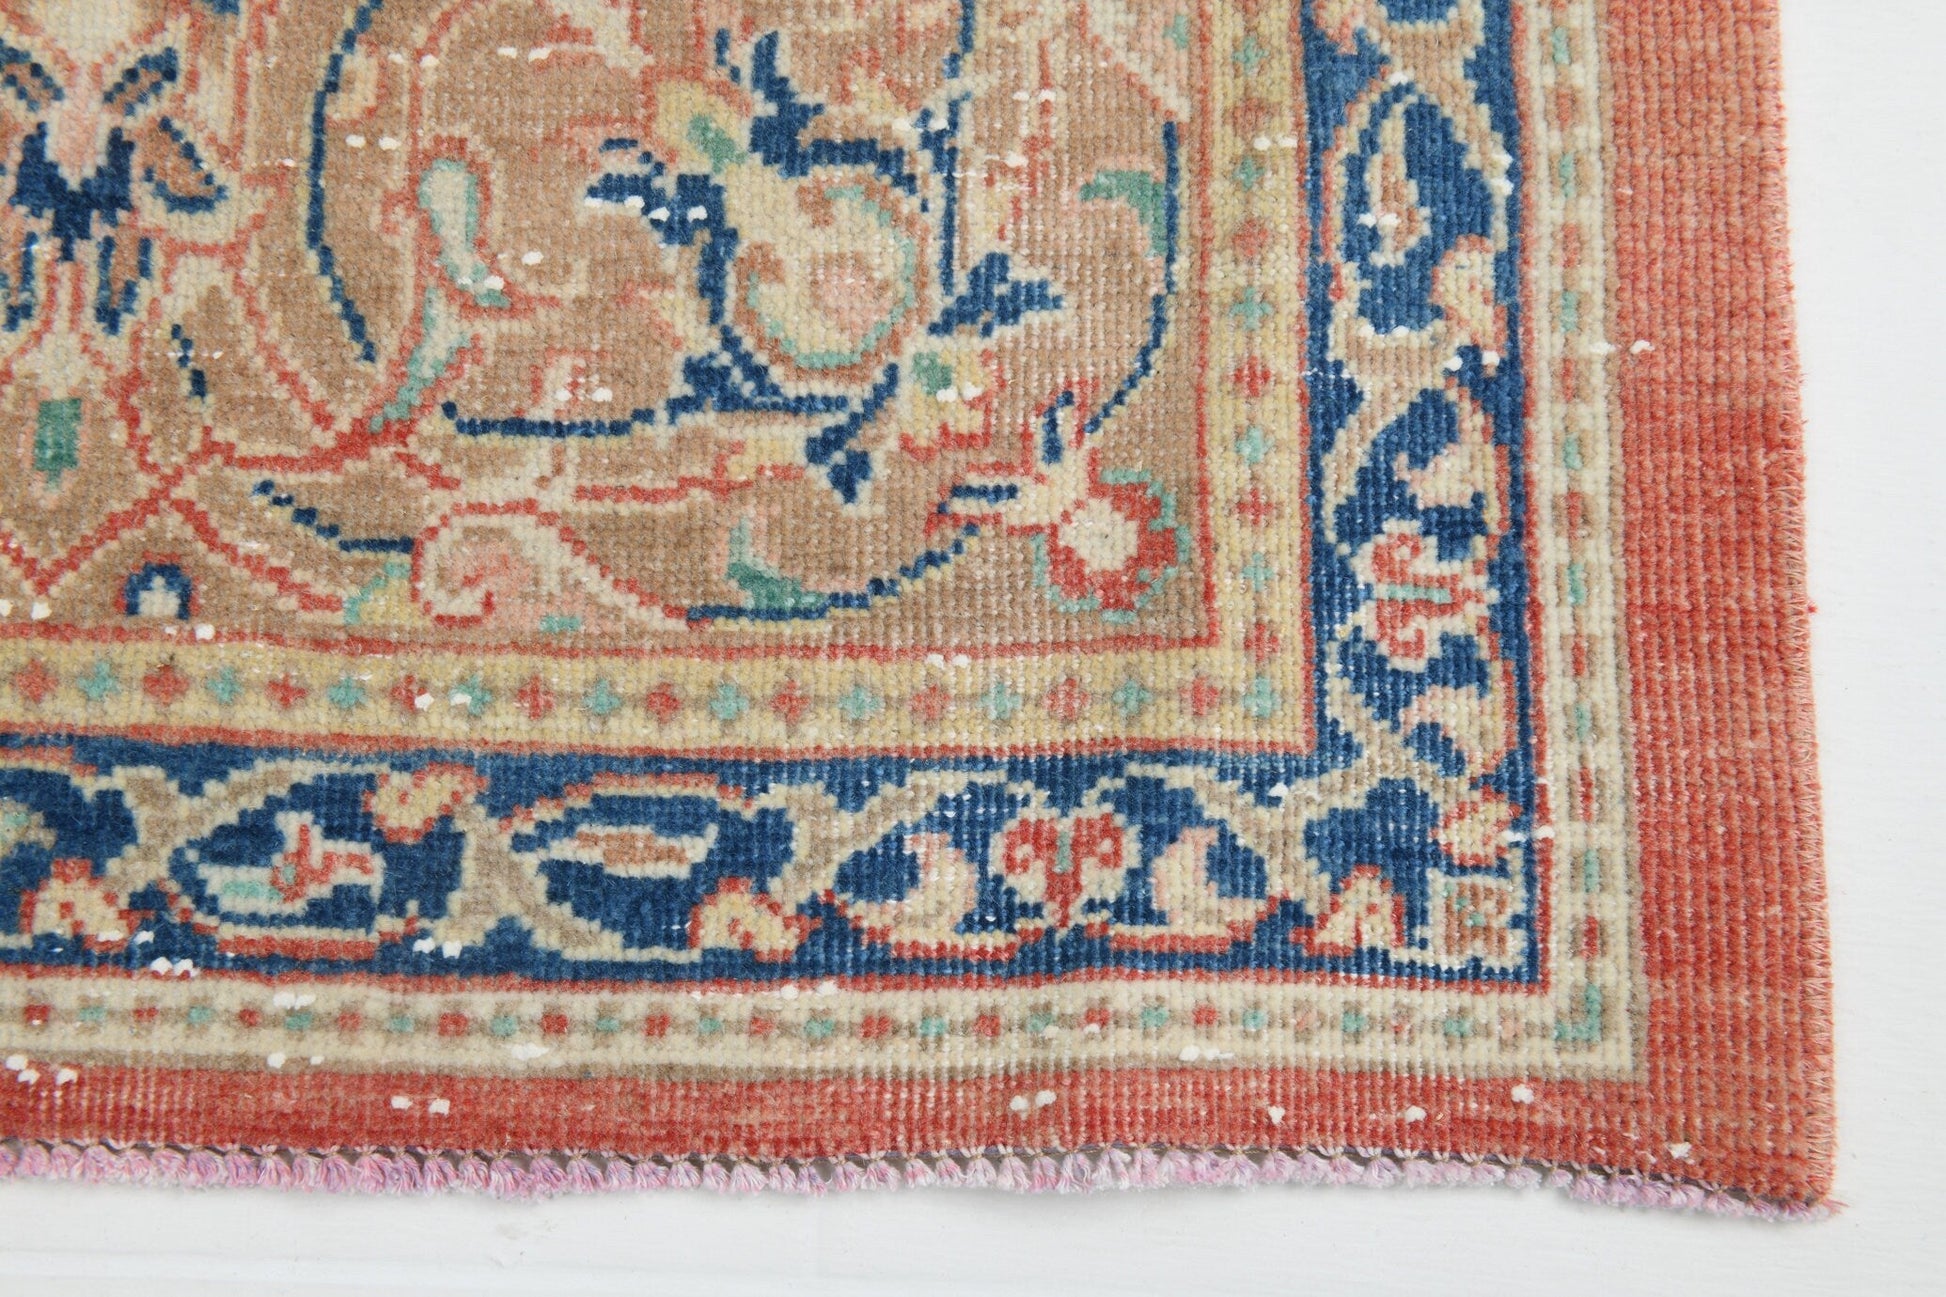 10’ x 13’ Vintage Persian Style Rug - 18947 - Zengoda Shop online from Artisan Brands